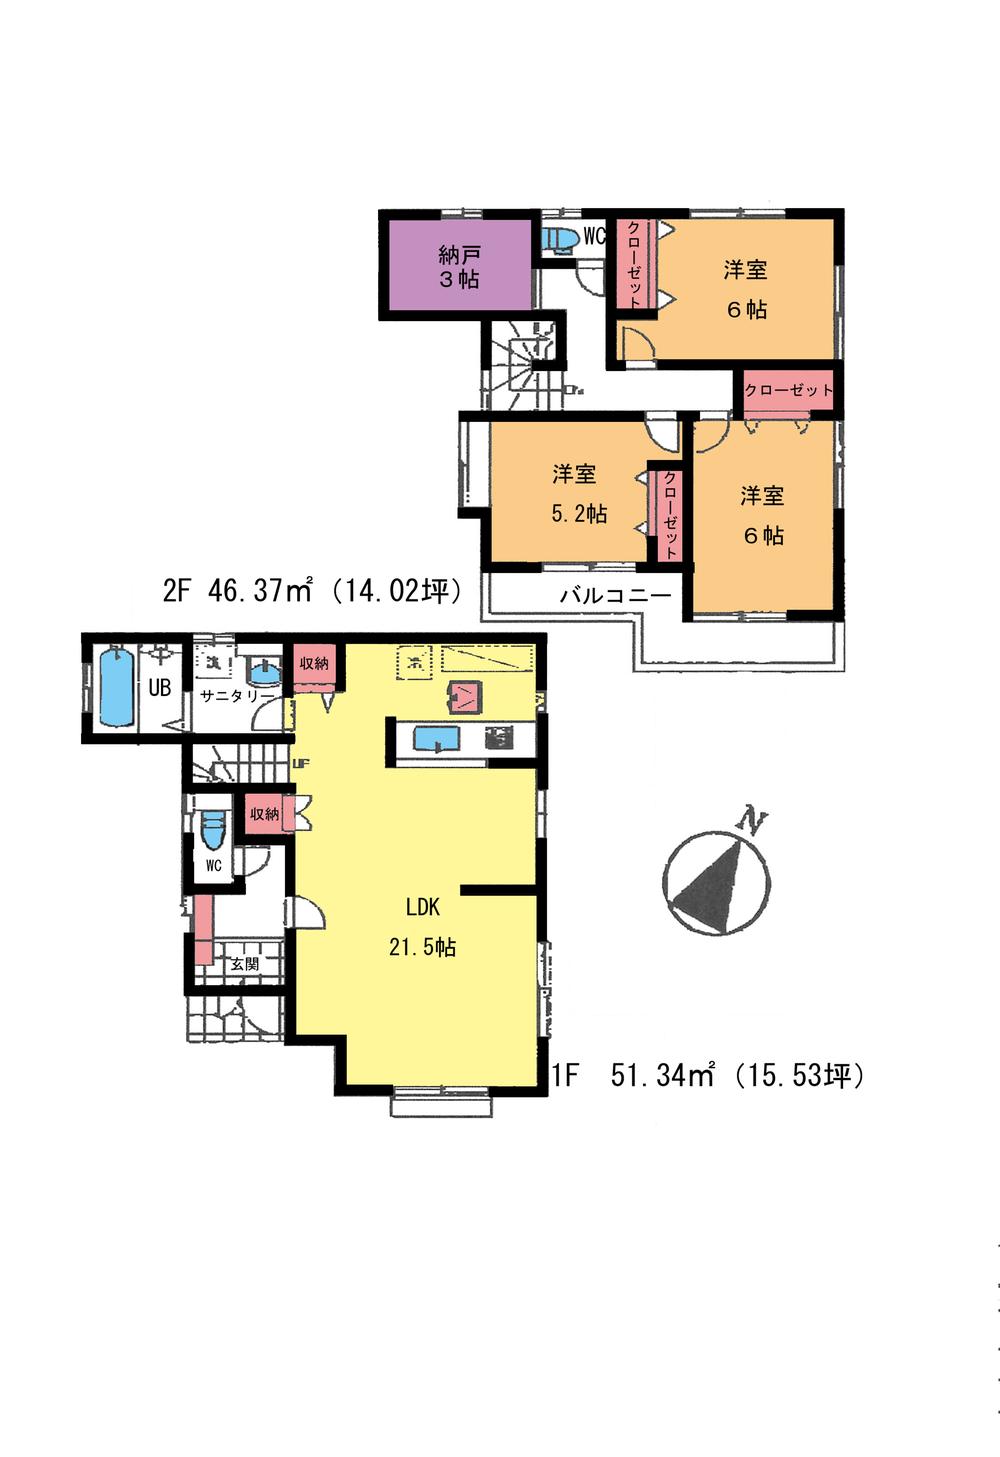 Floor plan. (1 Building), Price 27,800,000 yen, 4LDK, Land area 94 sq m , Building area 97.71 sq m